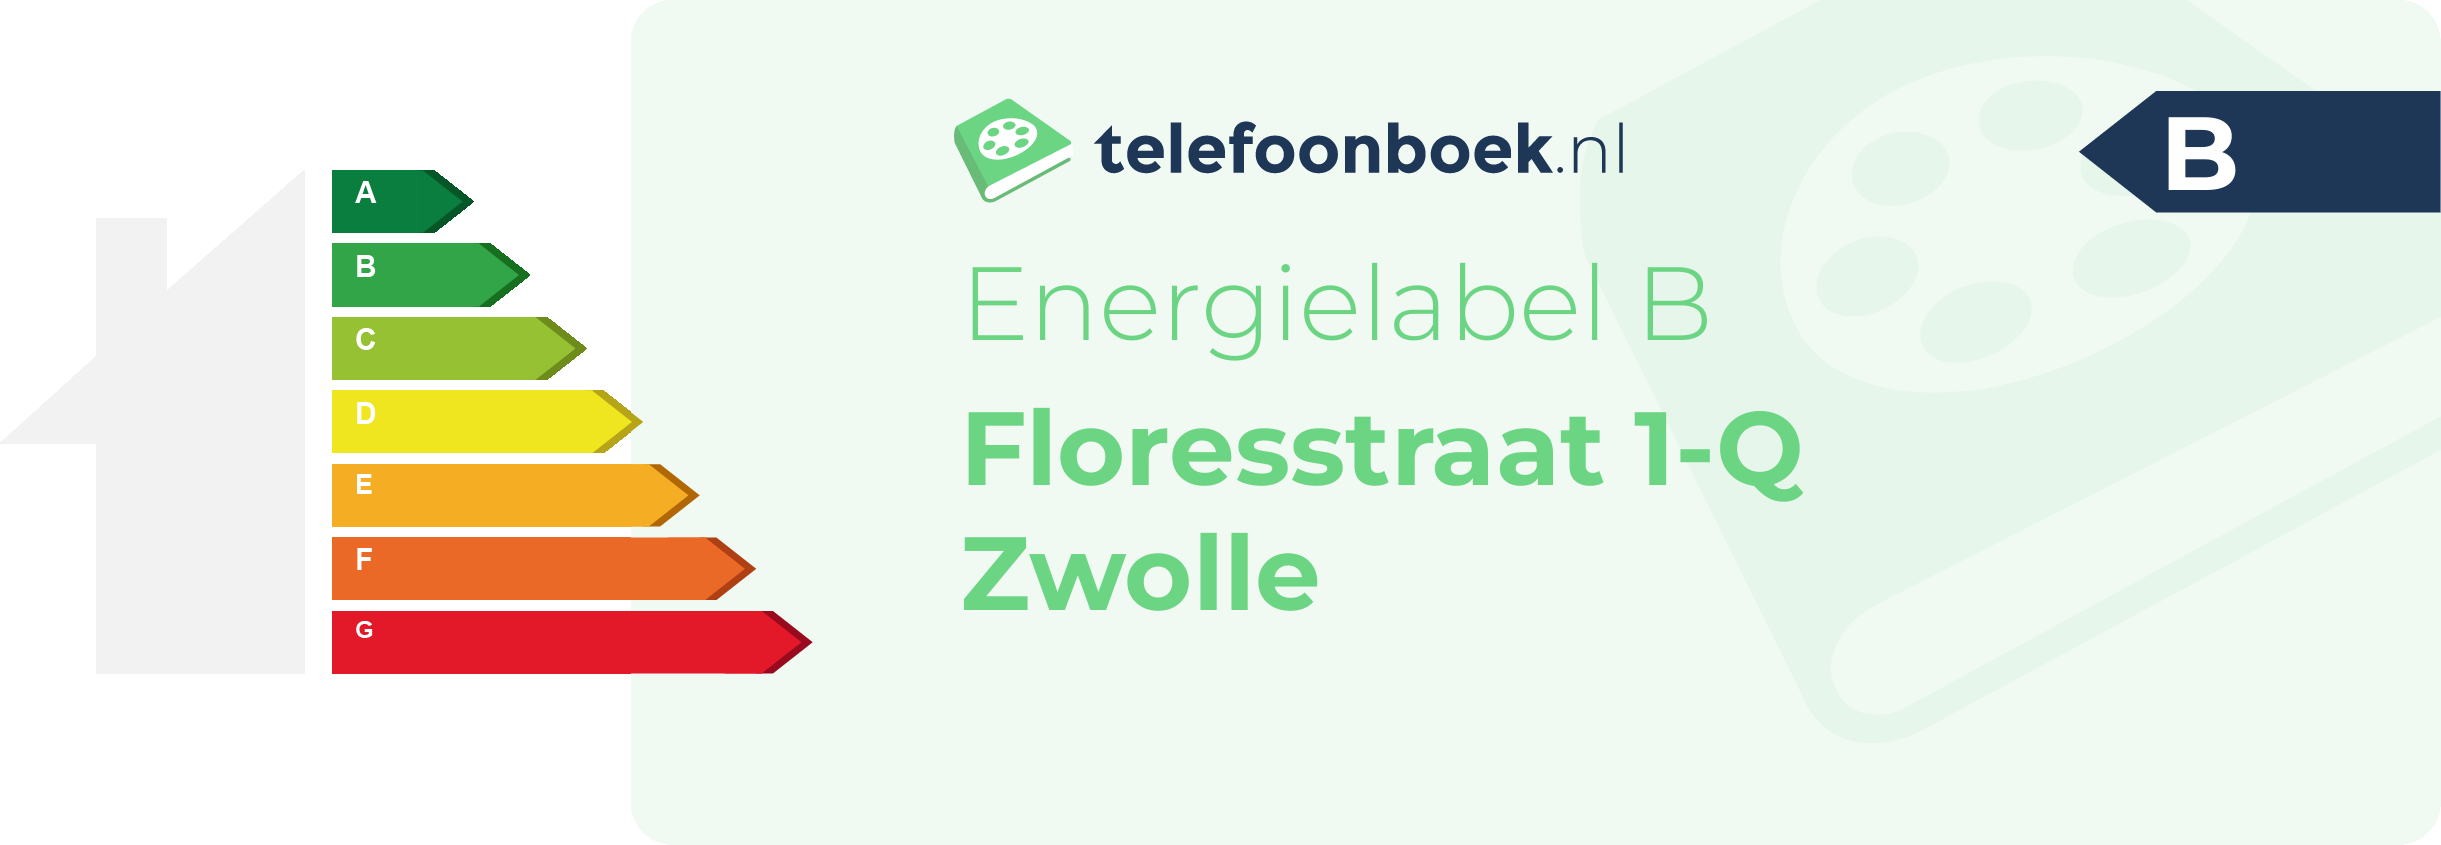 Energielabel Floresstraat 1-Q Zwolle